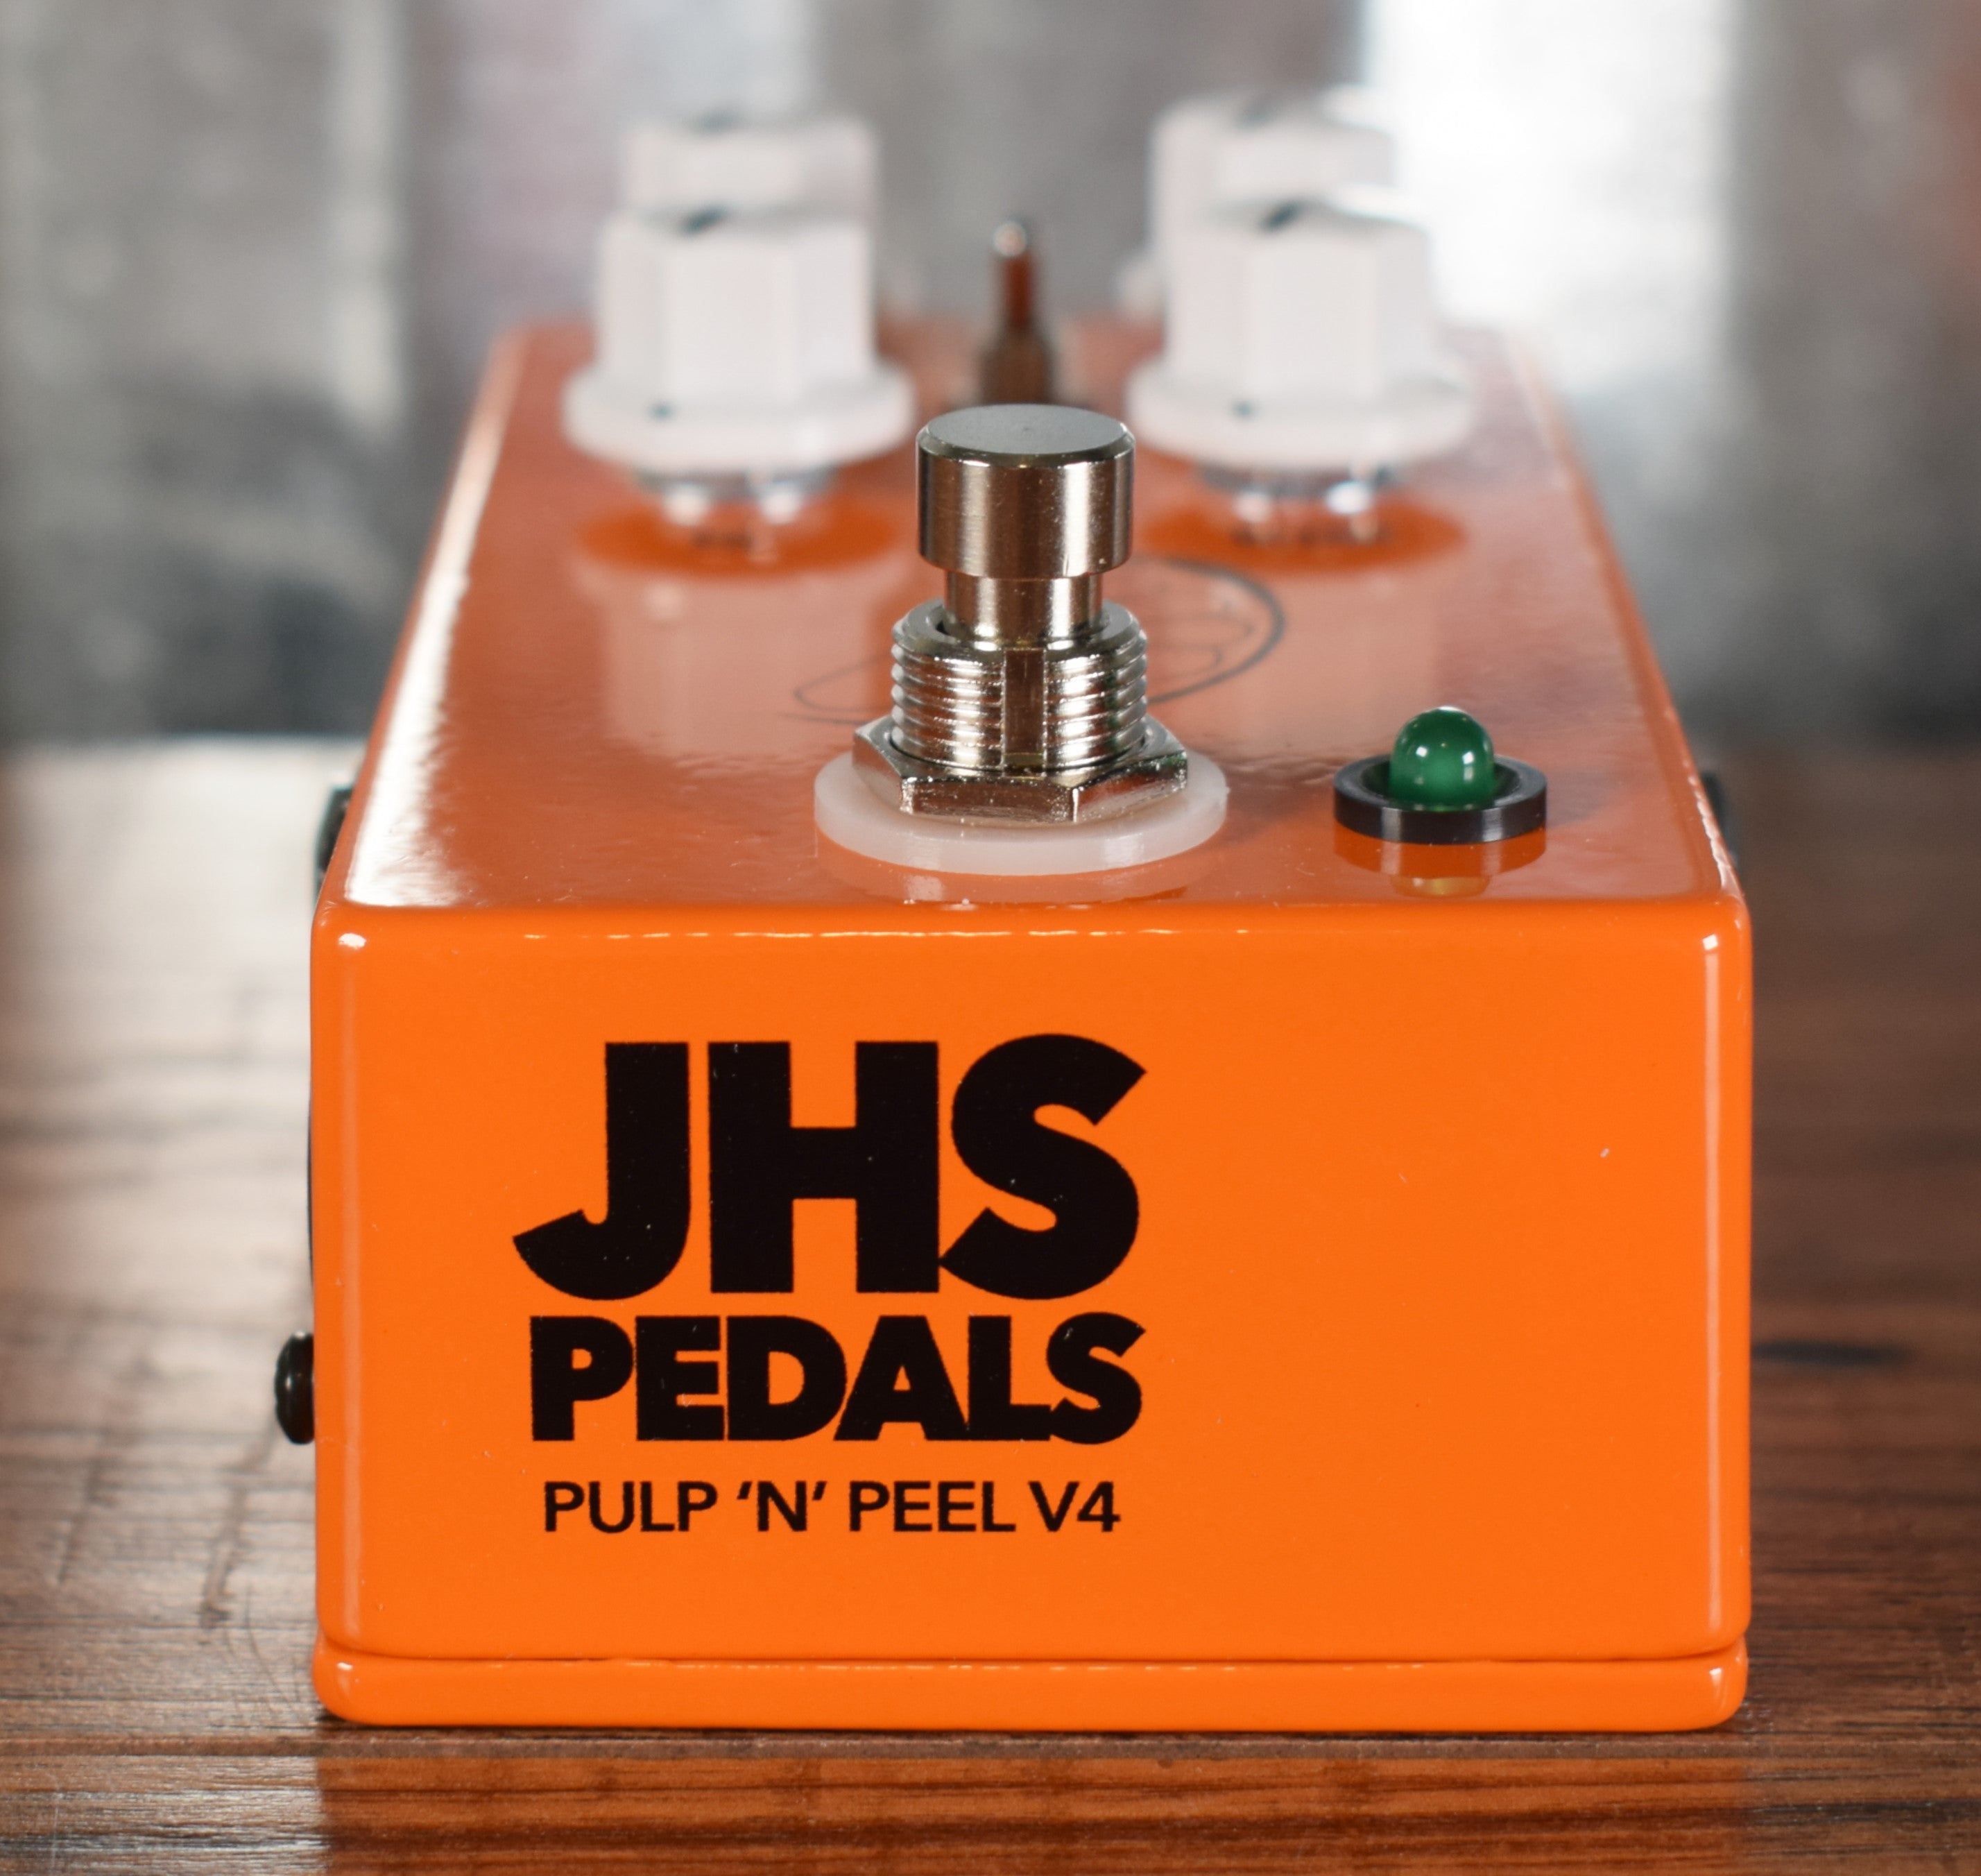 JHS Pedals Pulp N Peel V4 Compressor Preamp DI Guitar Effect Pedal